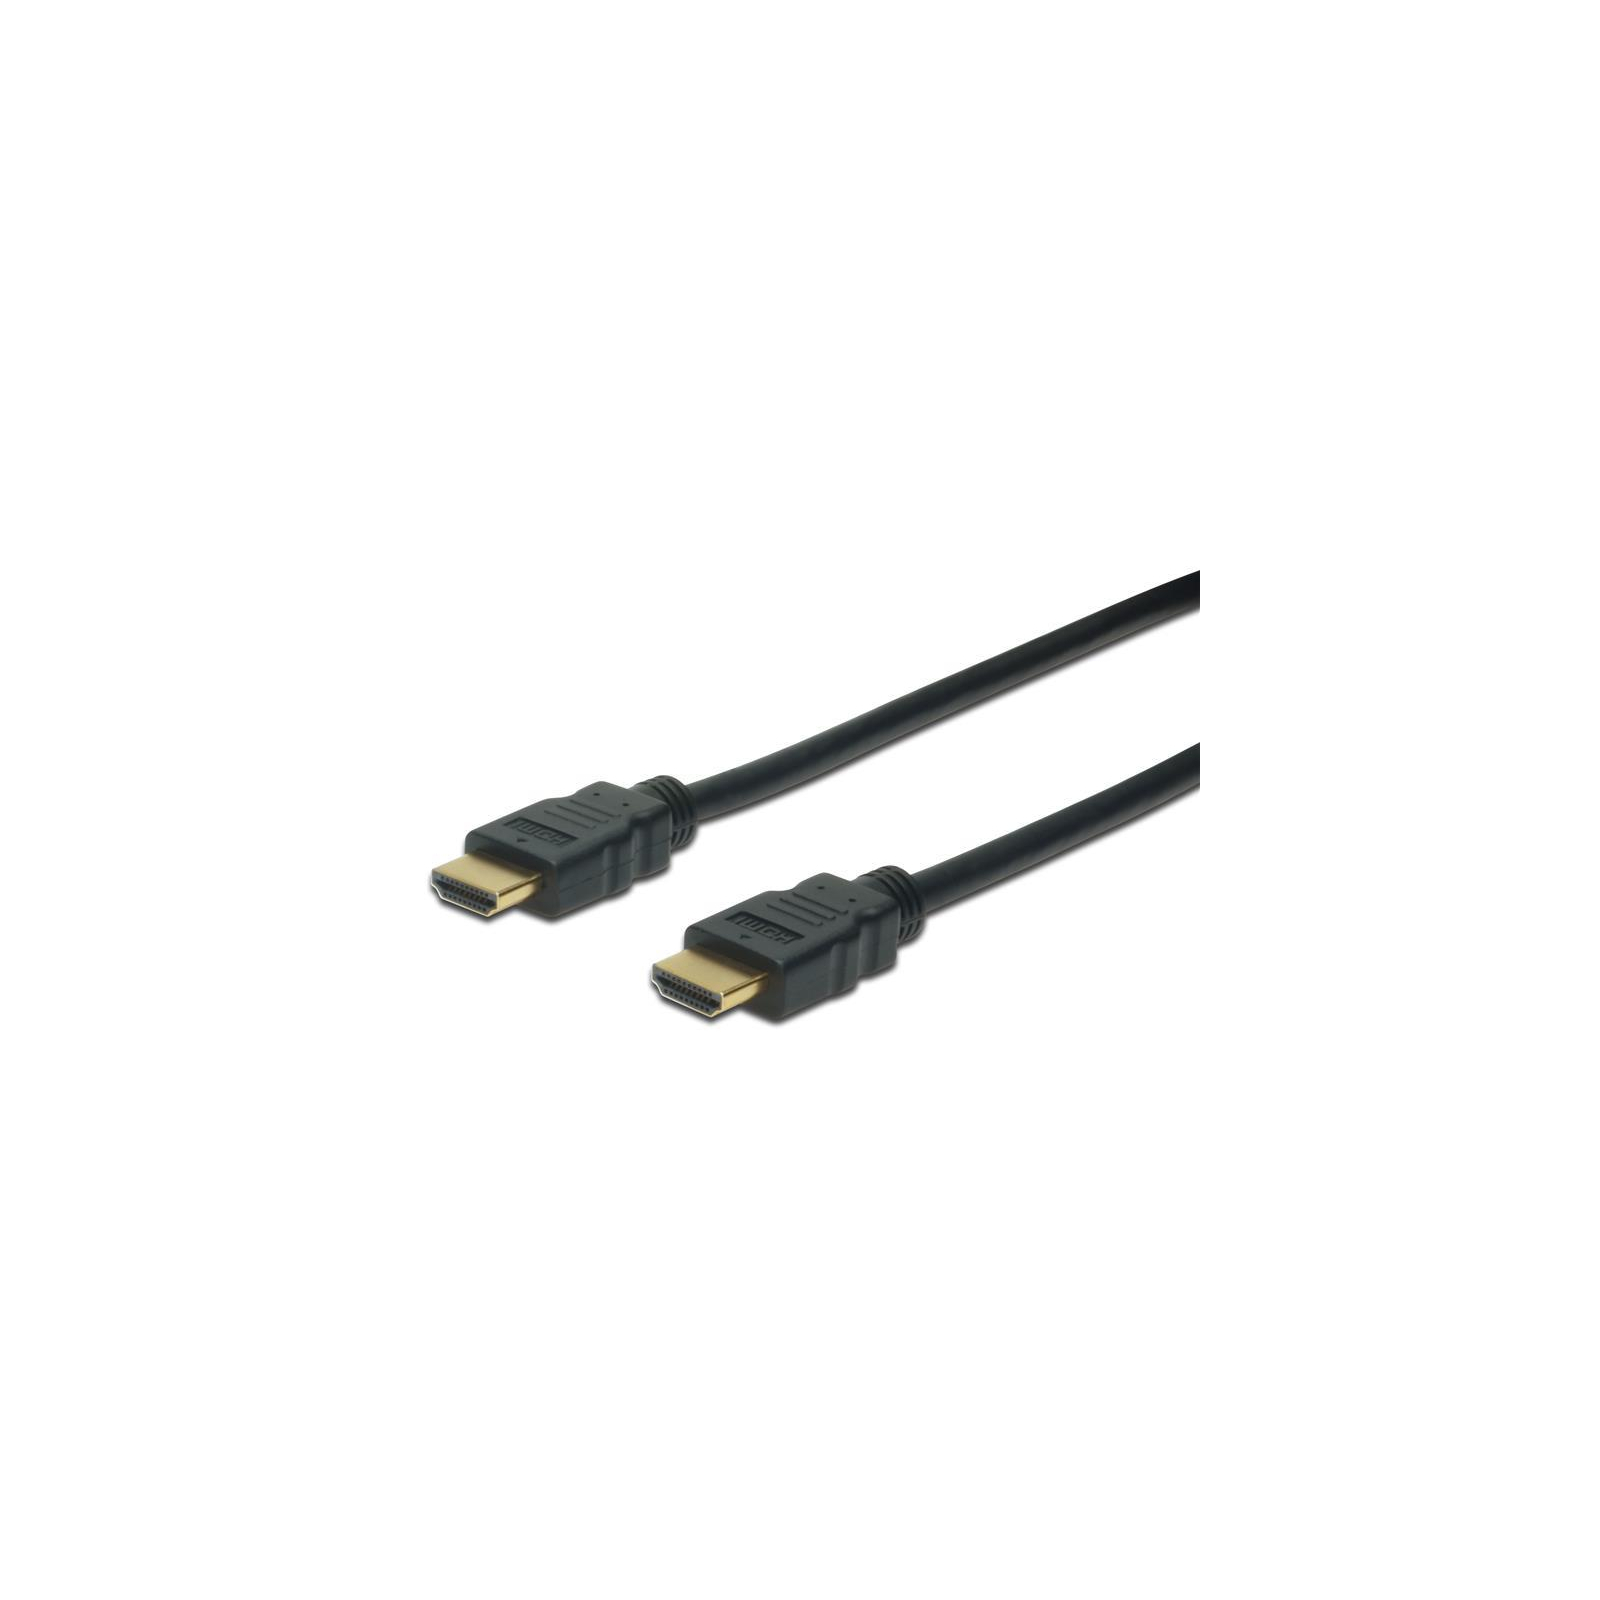 Кабель мультимедийный HDMI to HDMI 5.0m Assmann (AK-330114-050-S)